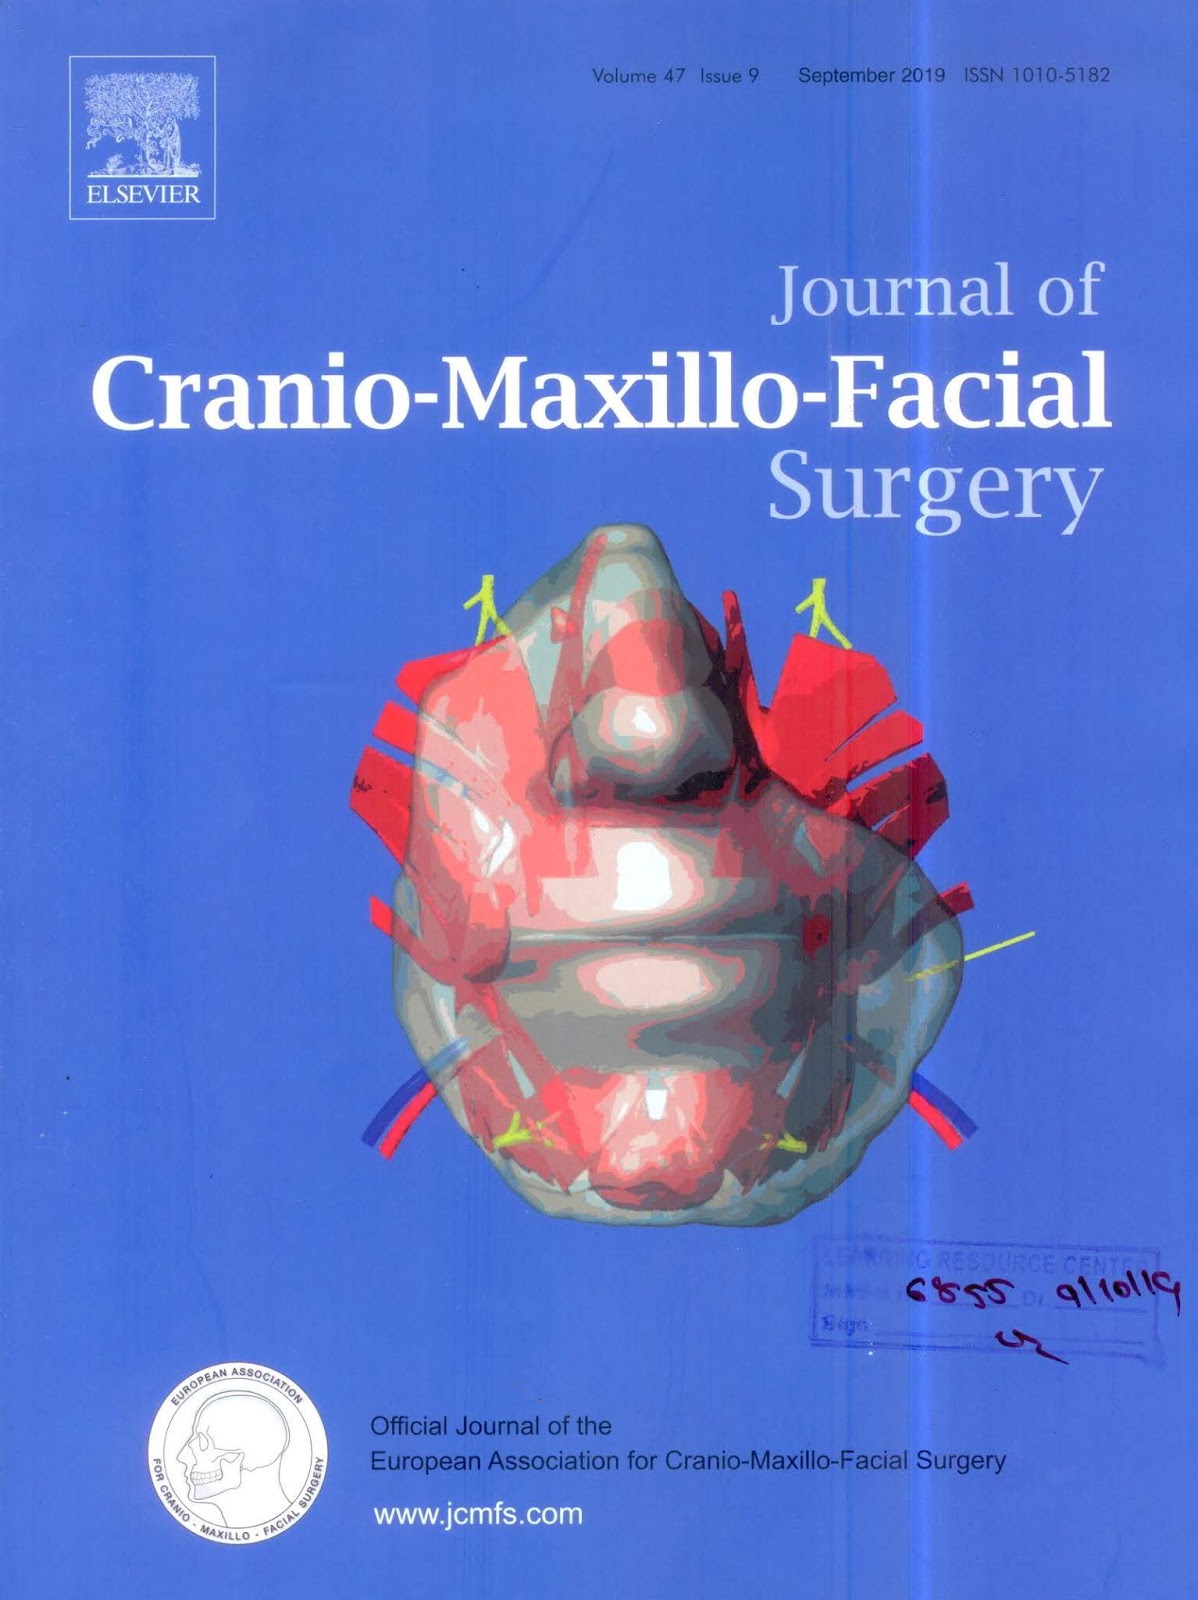 https://www.sciencedirect.com/journal/journal-of-cranio-maxillofacial-surgery/vol/47/issue/9